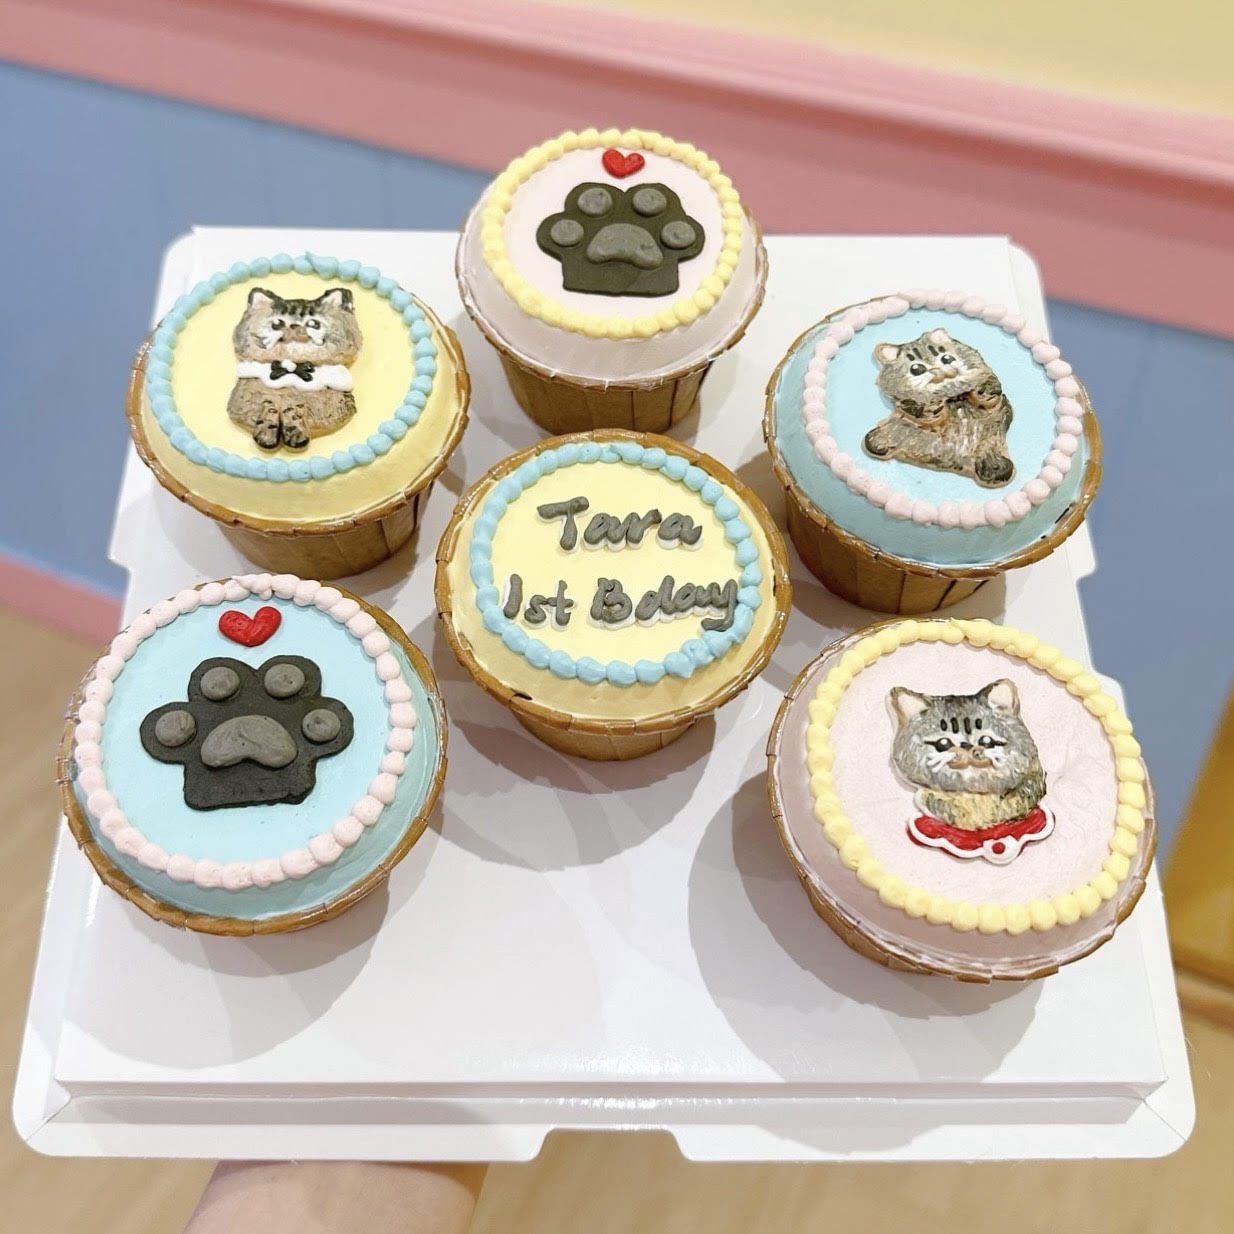 Cat Theme Cupcakes